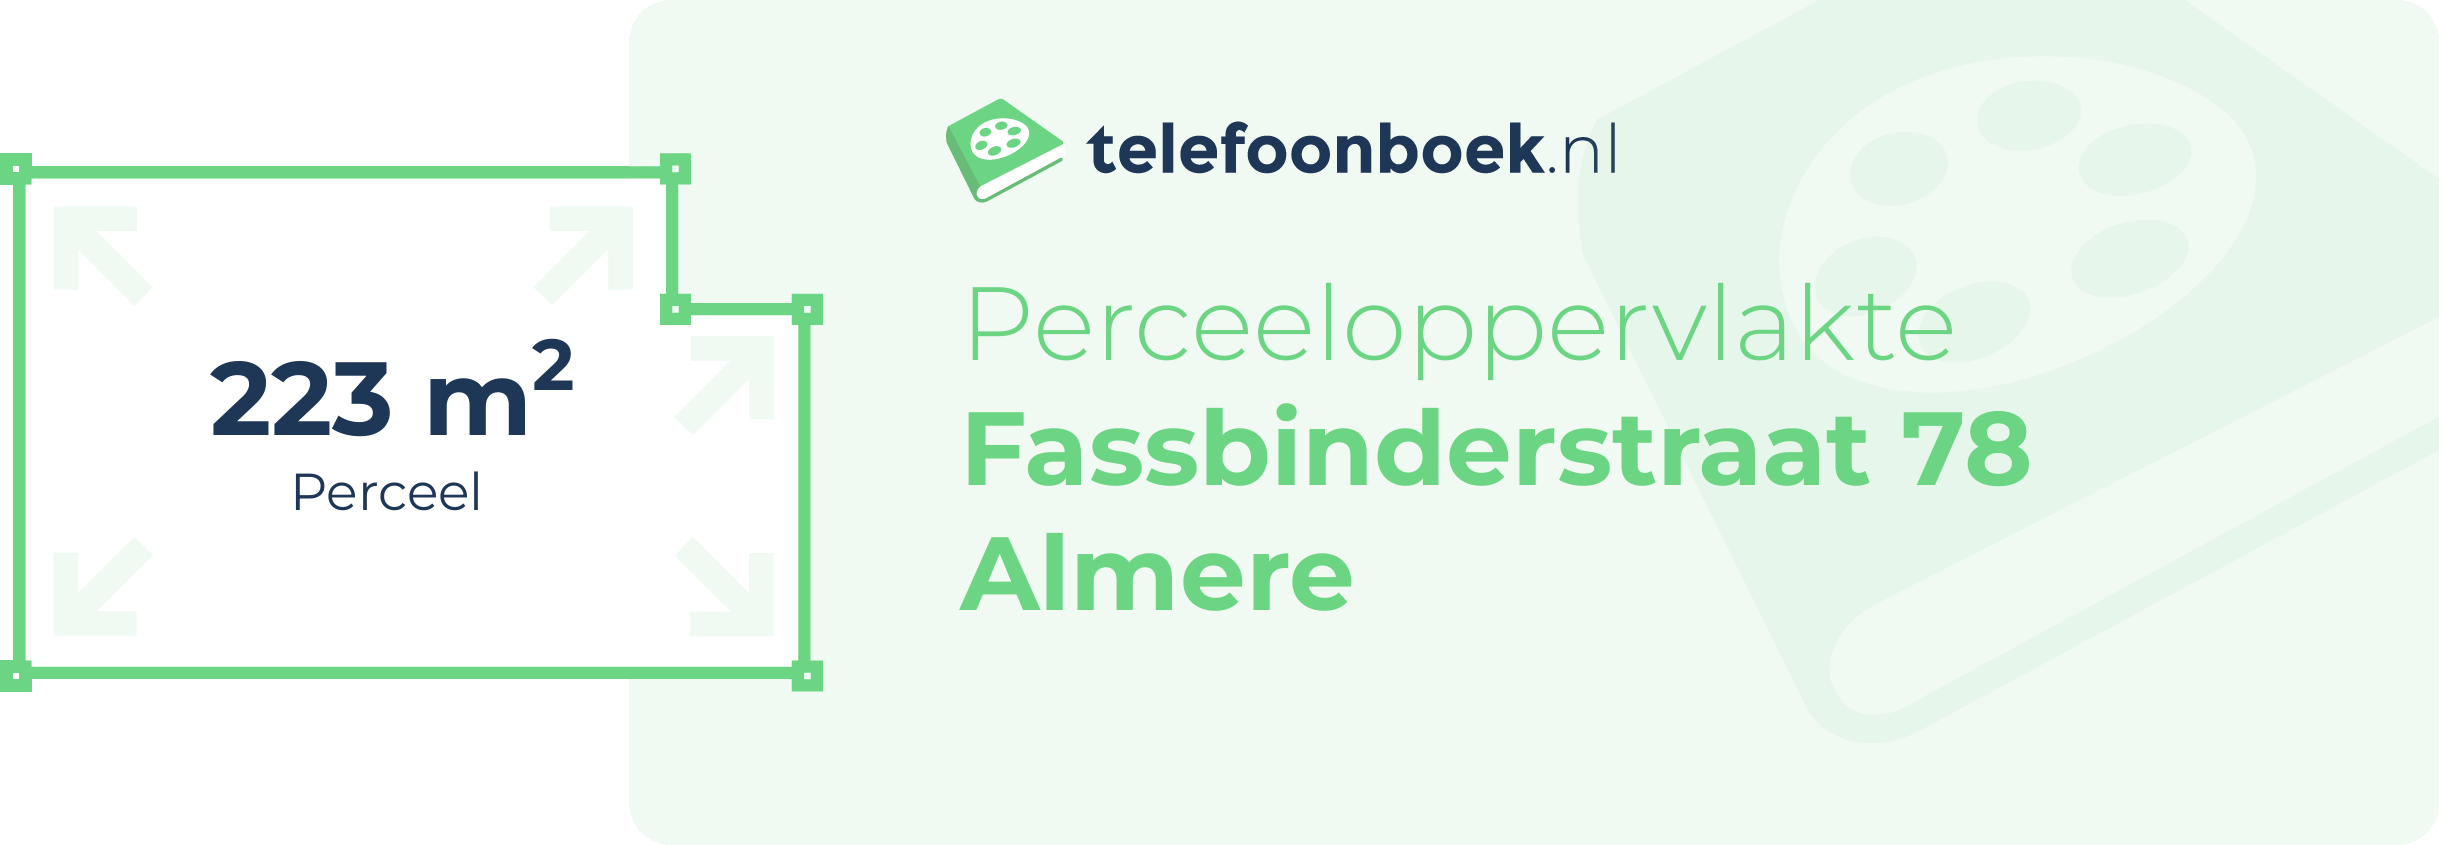 Perceeloppervlakte Fassbinderstraat 78 Almere